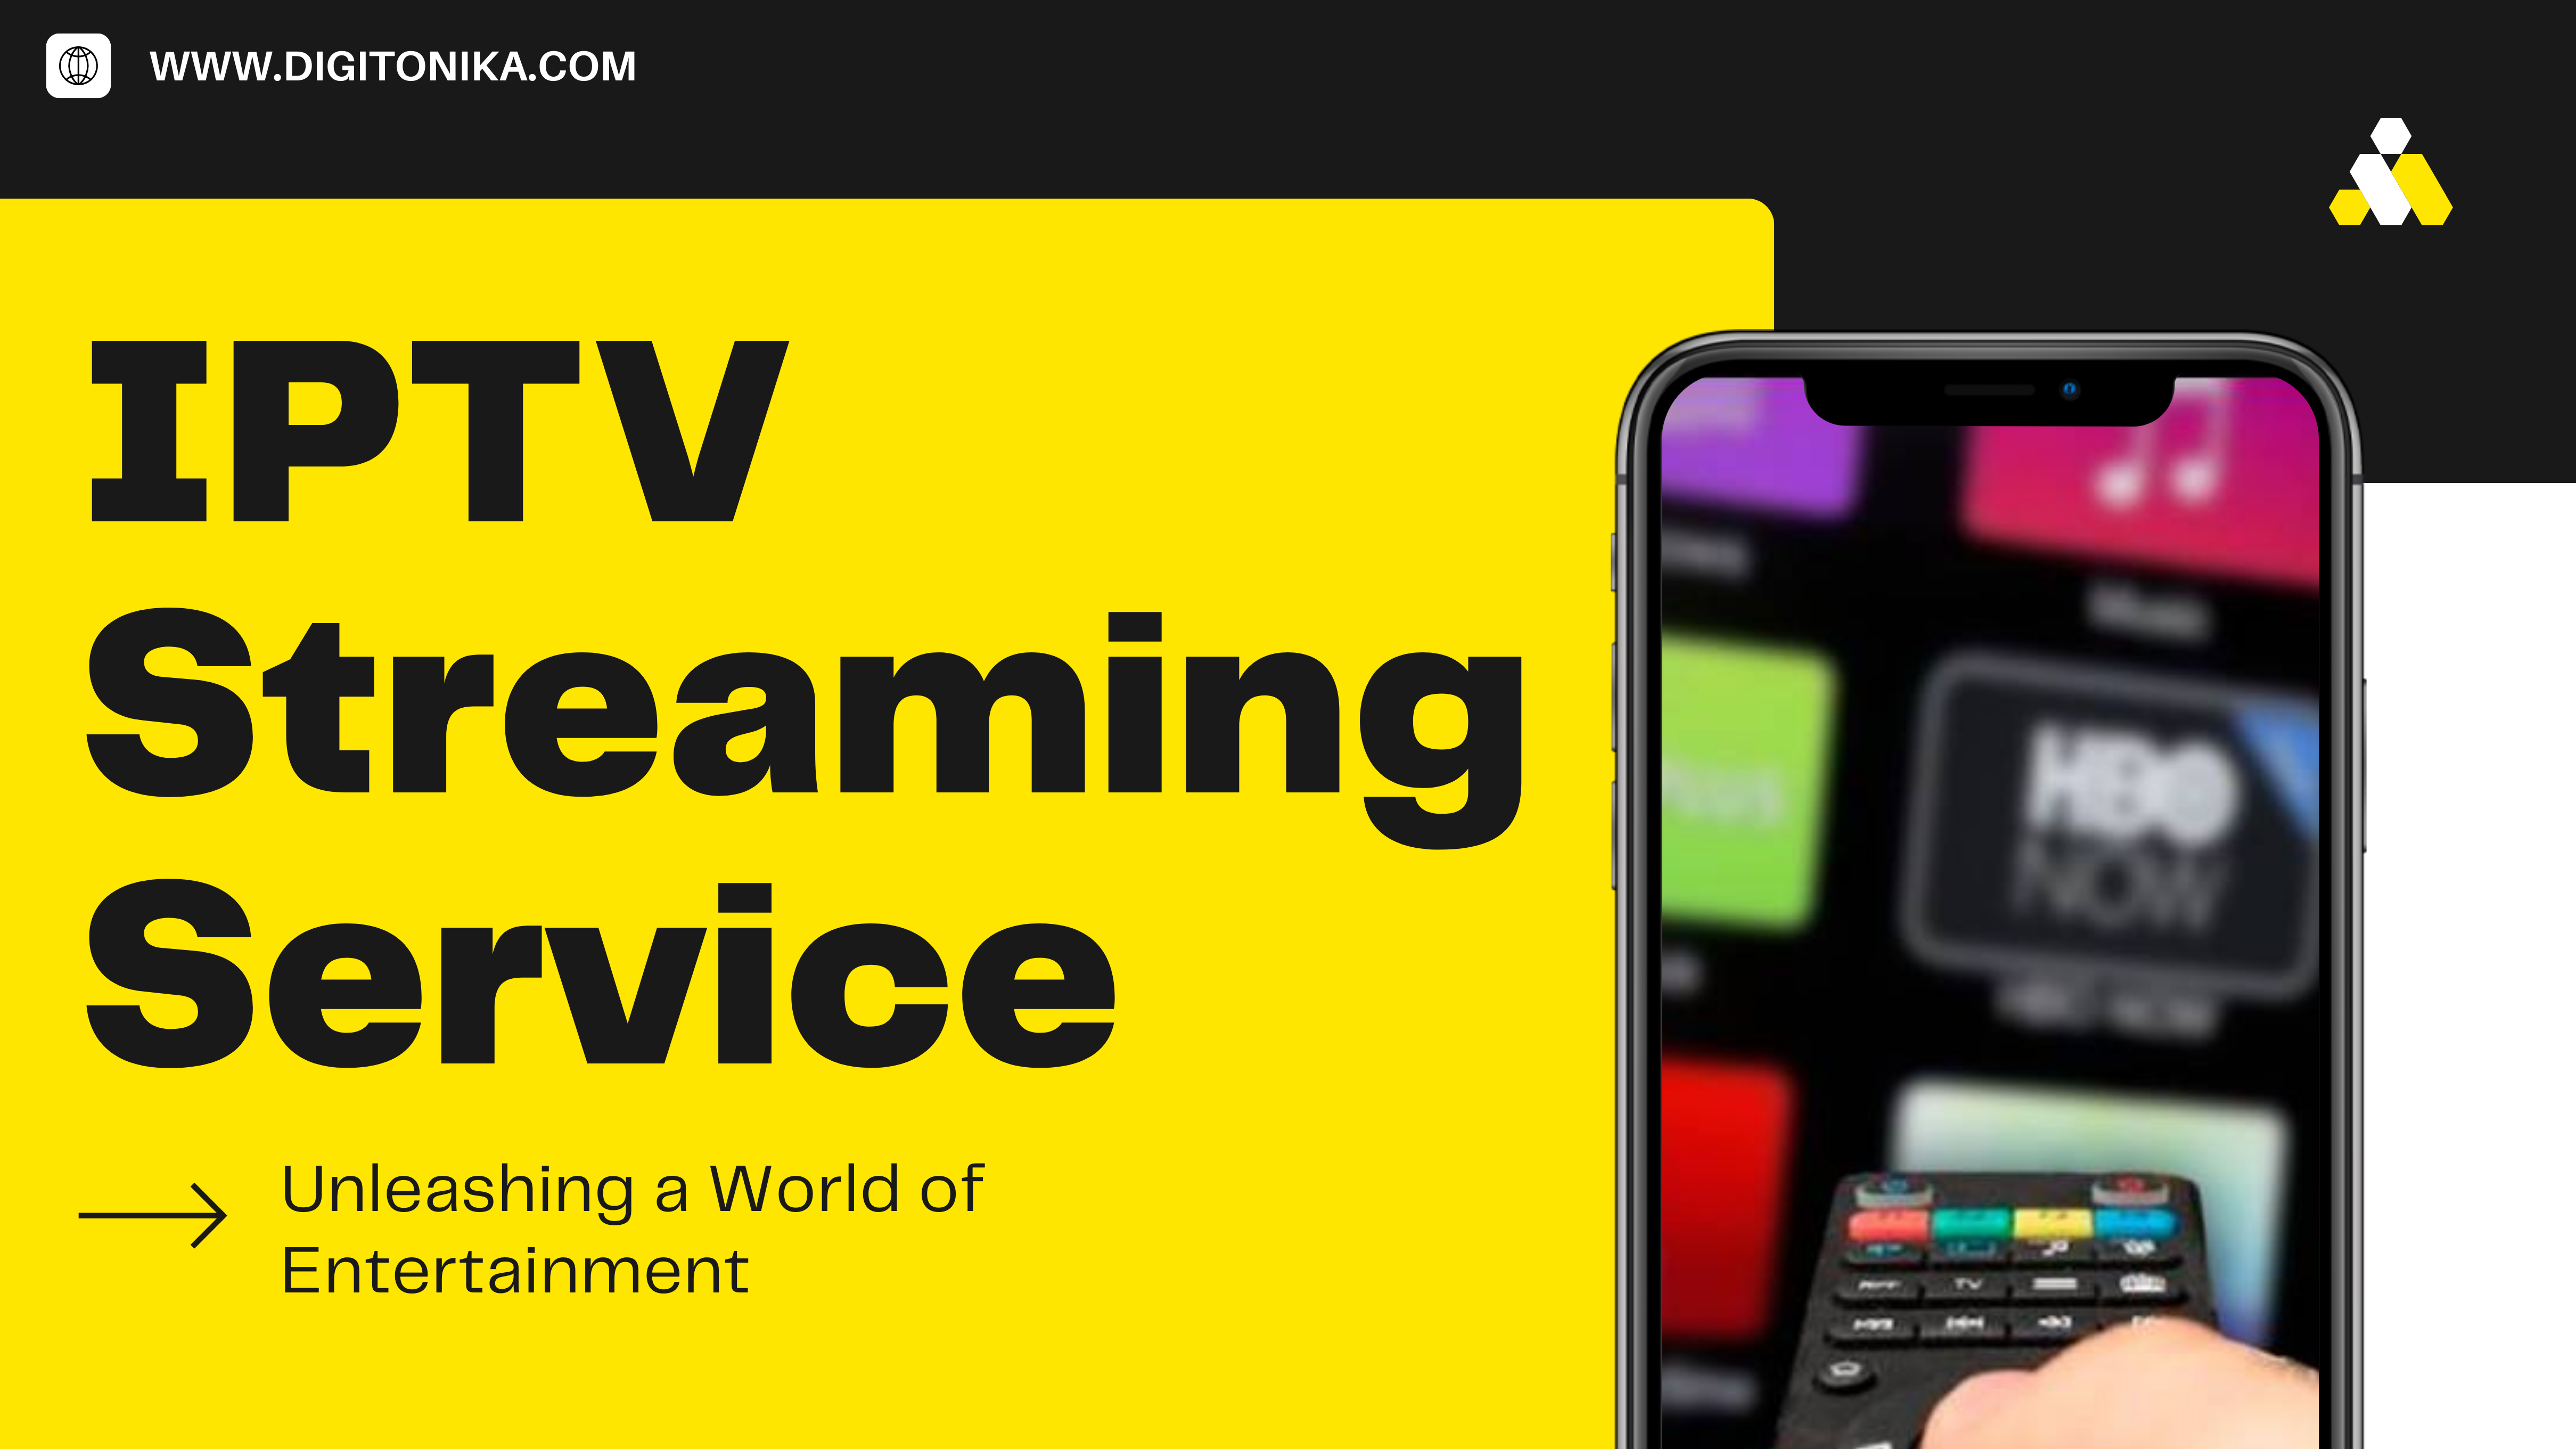 IPTV Streaming Service: Unleashing a World of Entertainment